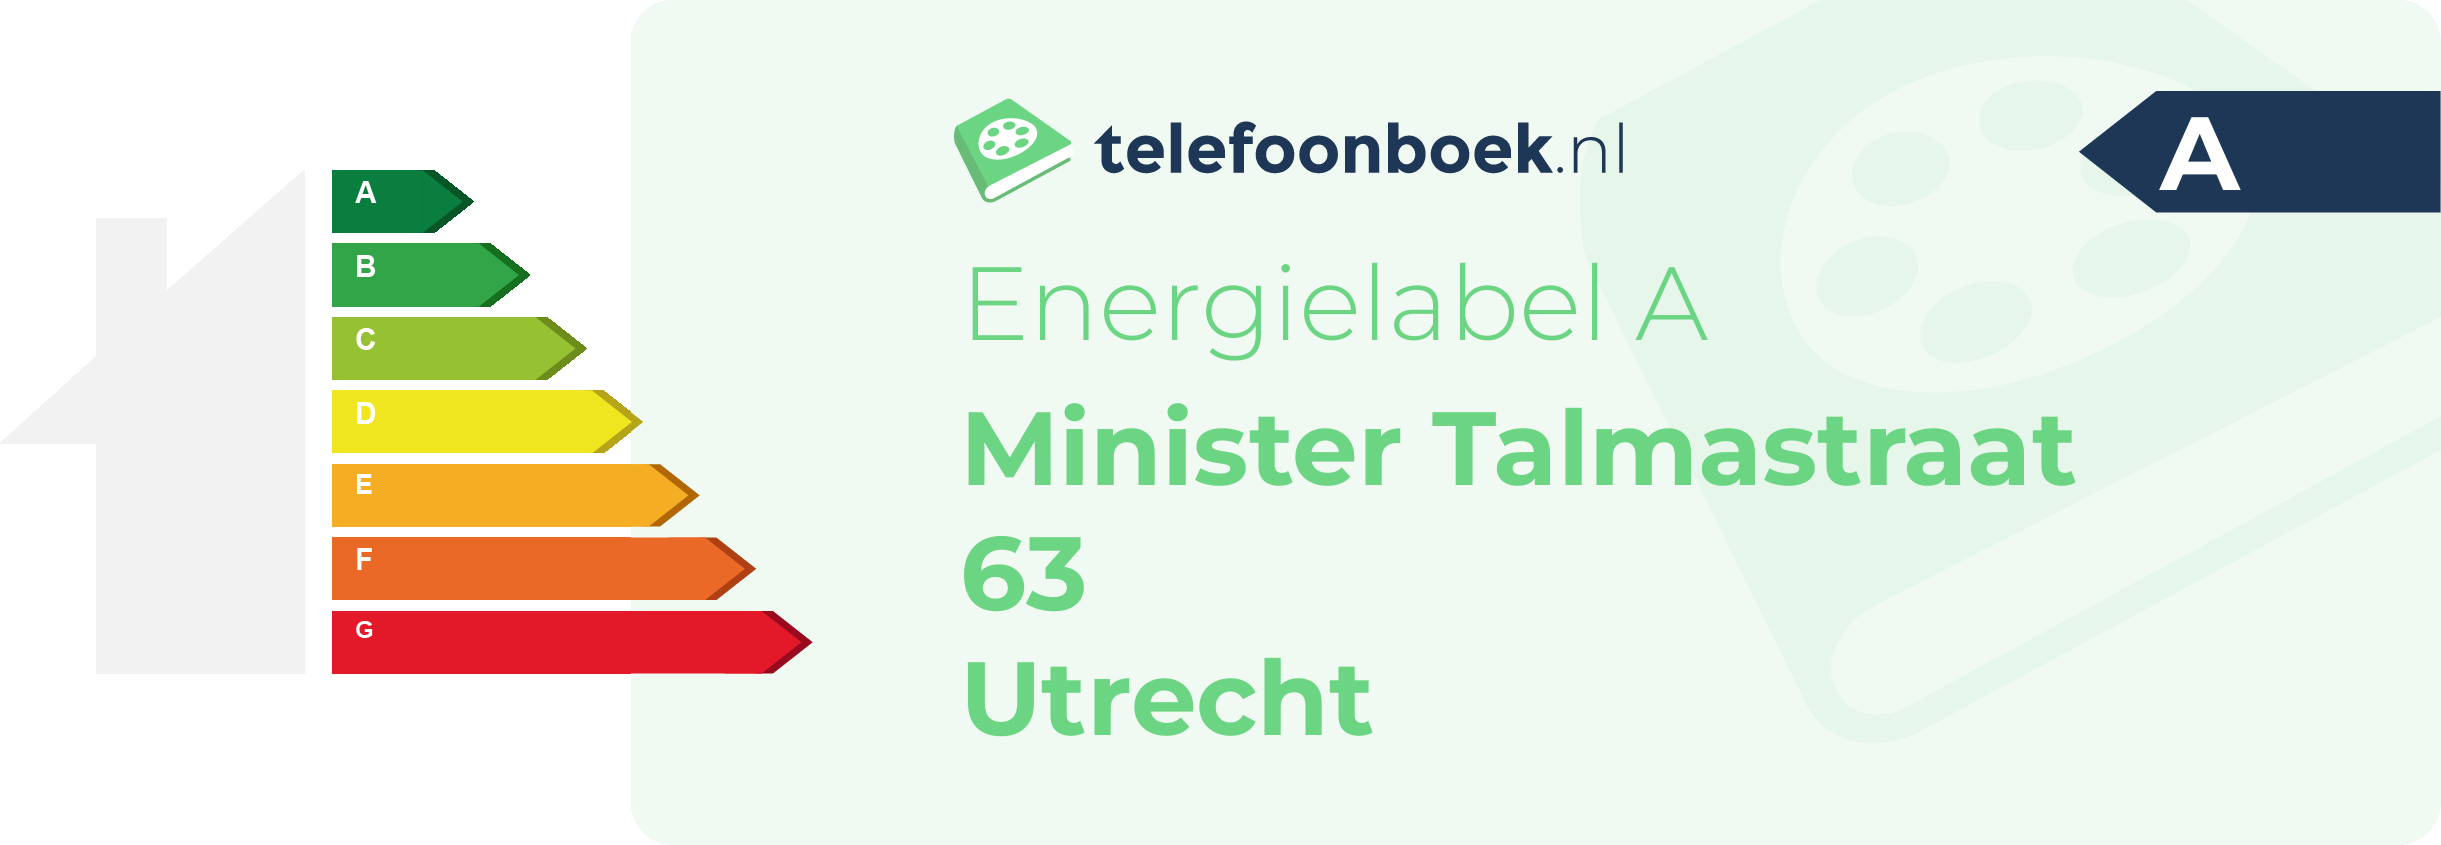 Energielabel Minister Talmastraat 63 Utrecht